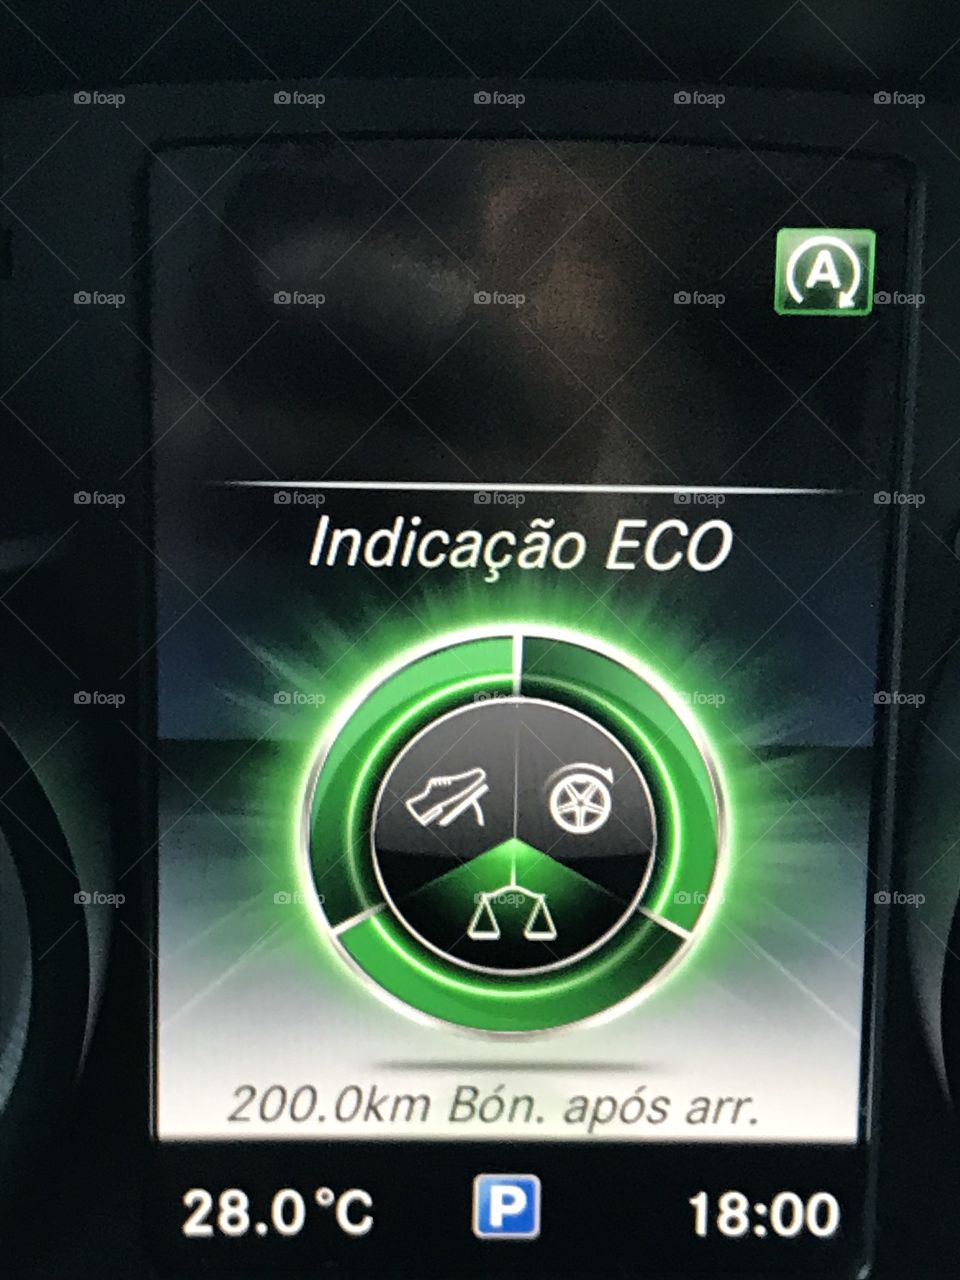 Eco-driving